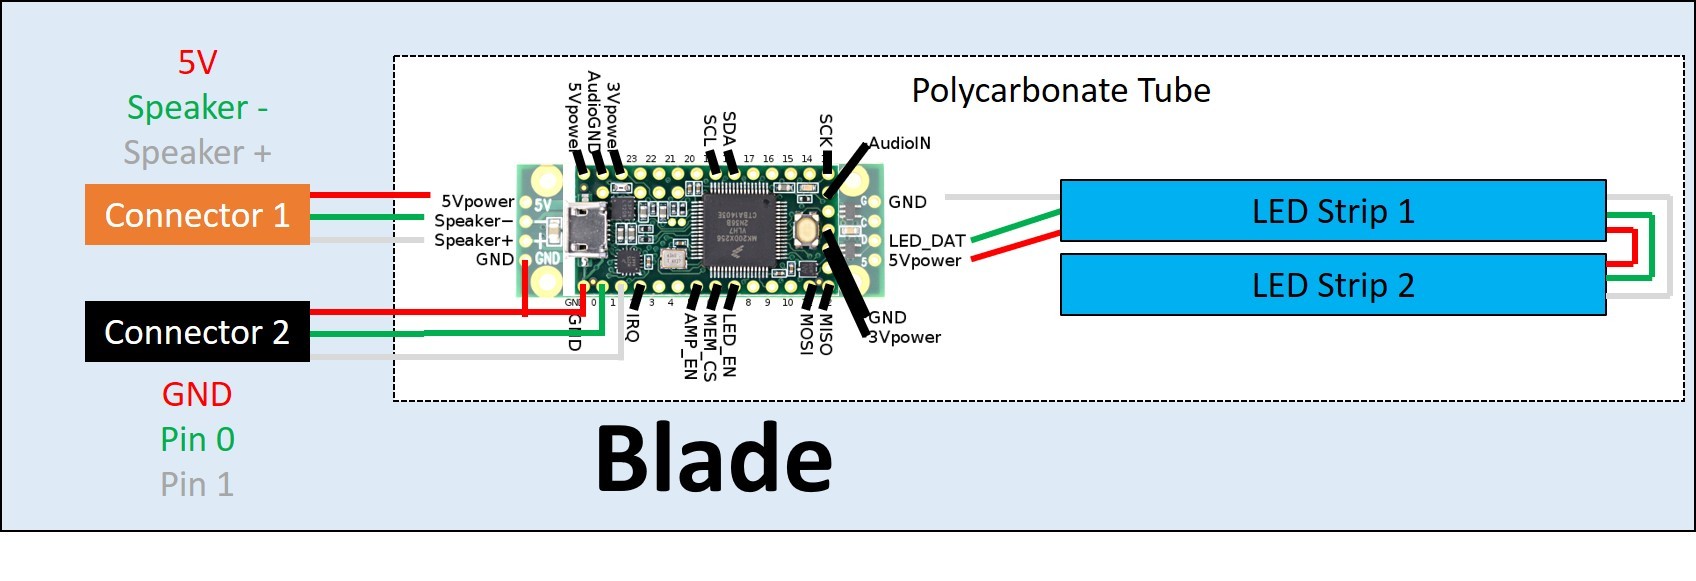 Blade Wiring Diagram.jpg